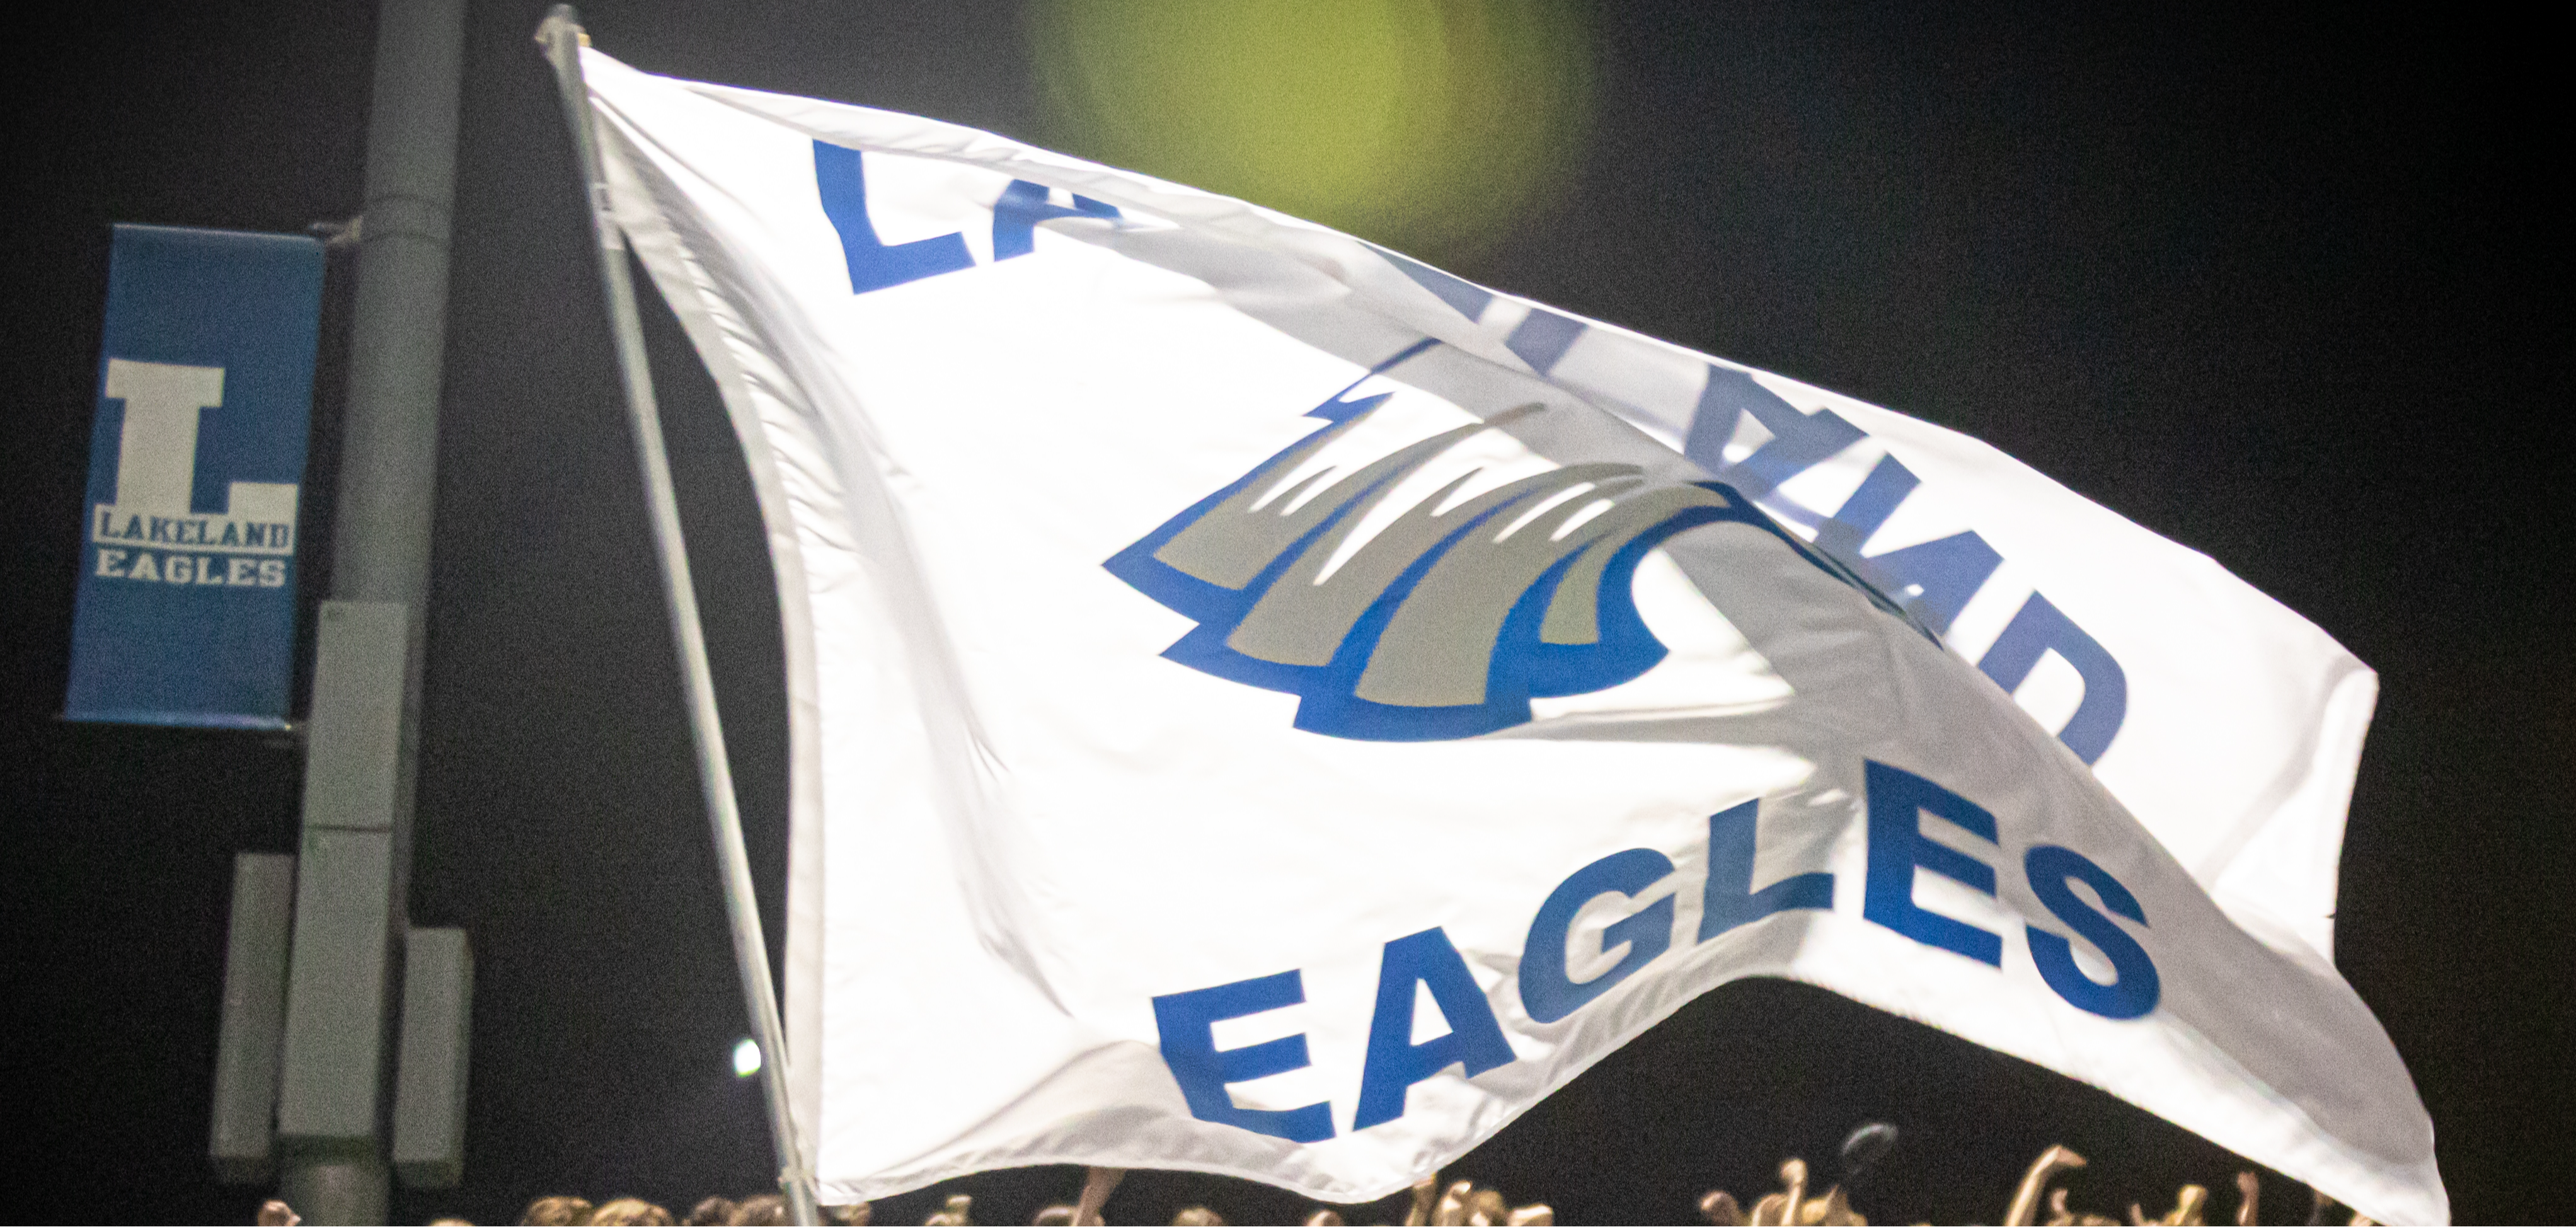 Lakeland Eagles flag waving 